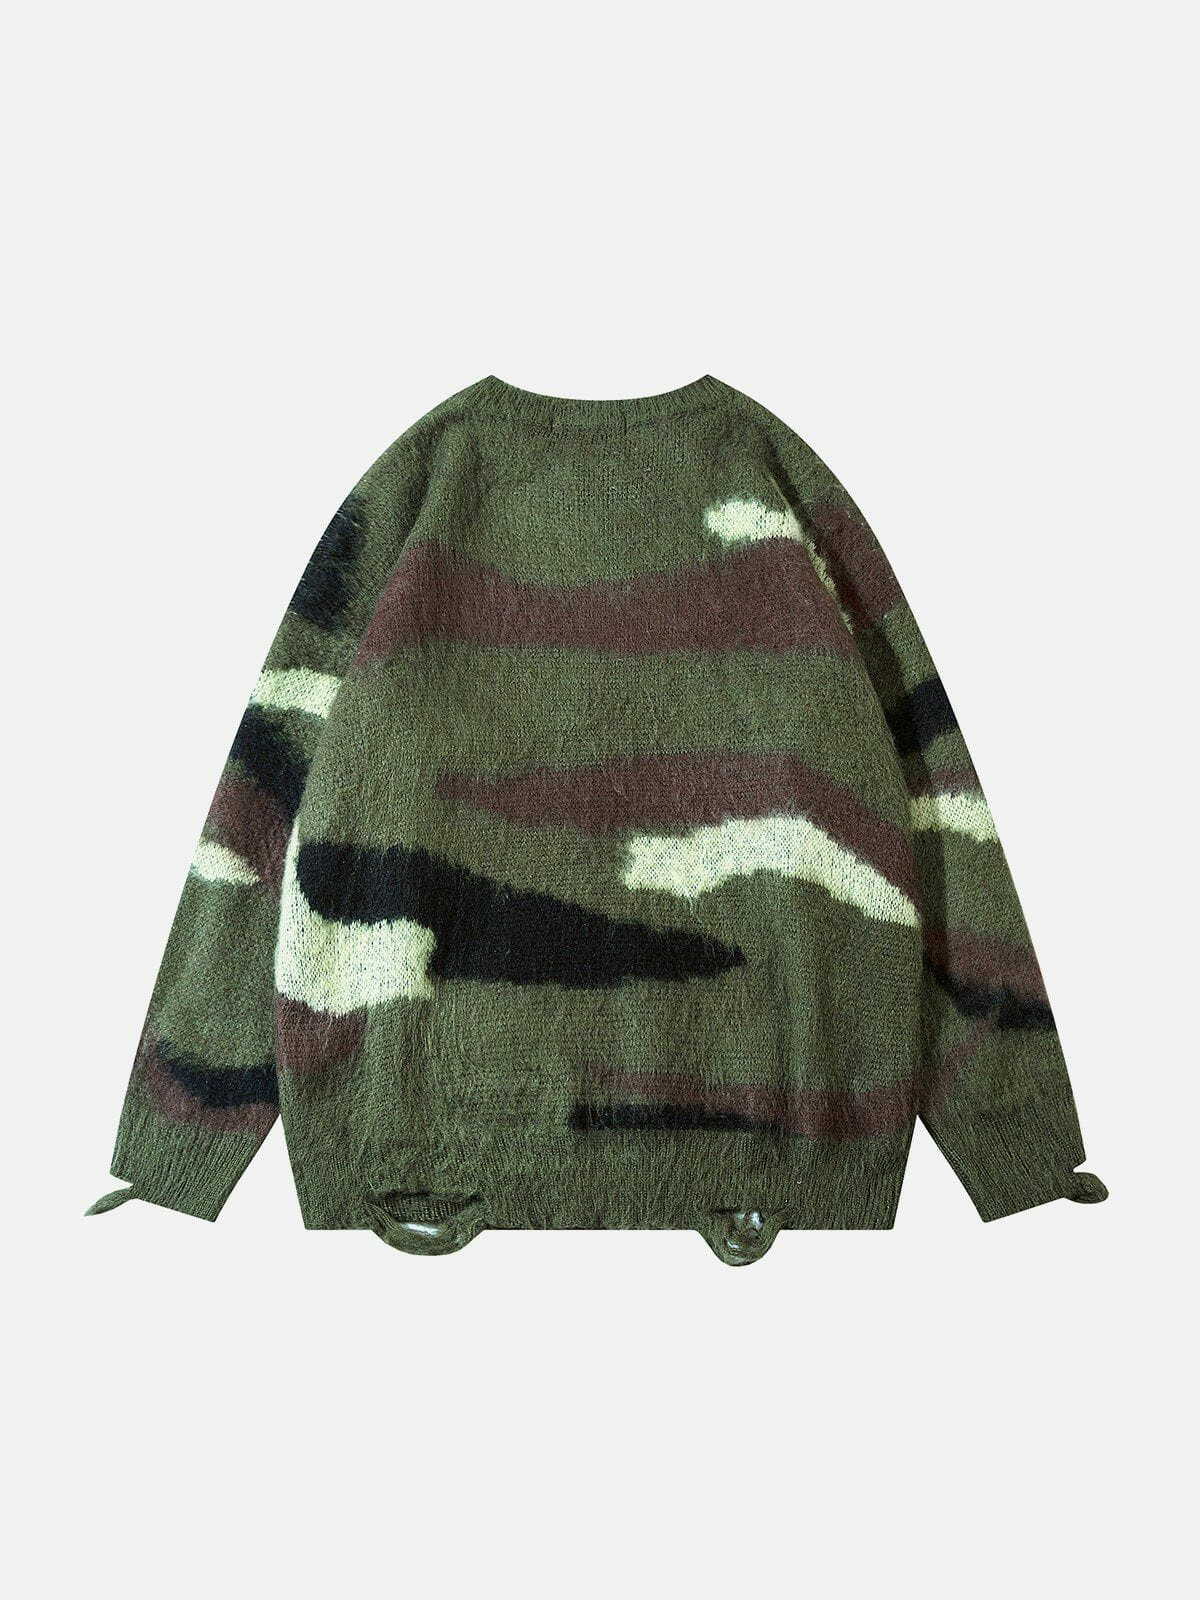 camouflage crewneck sweater urban camo streetwear 4618